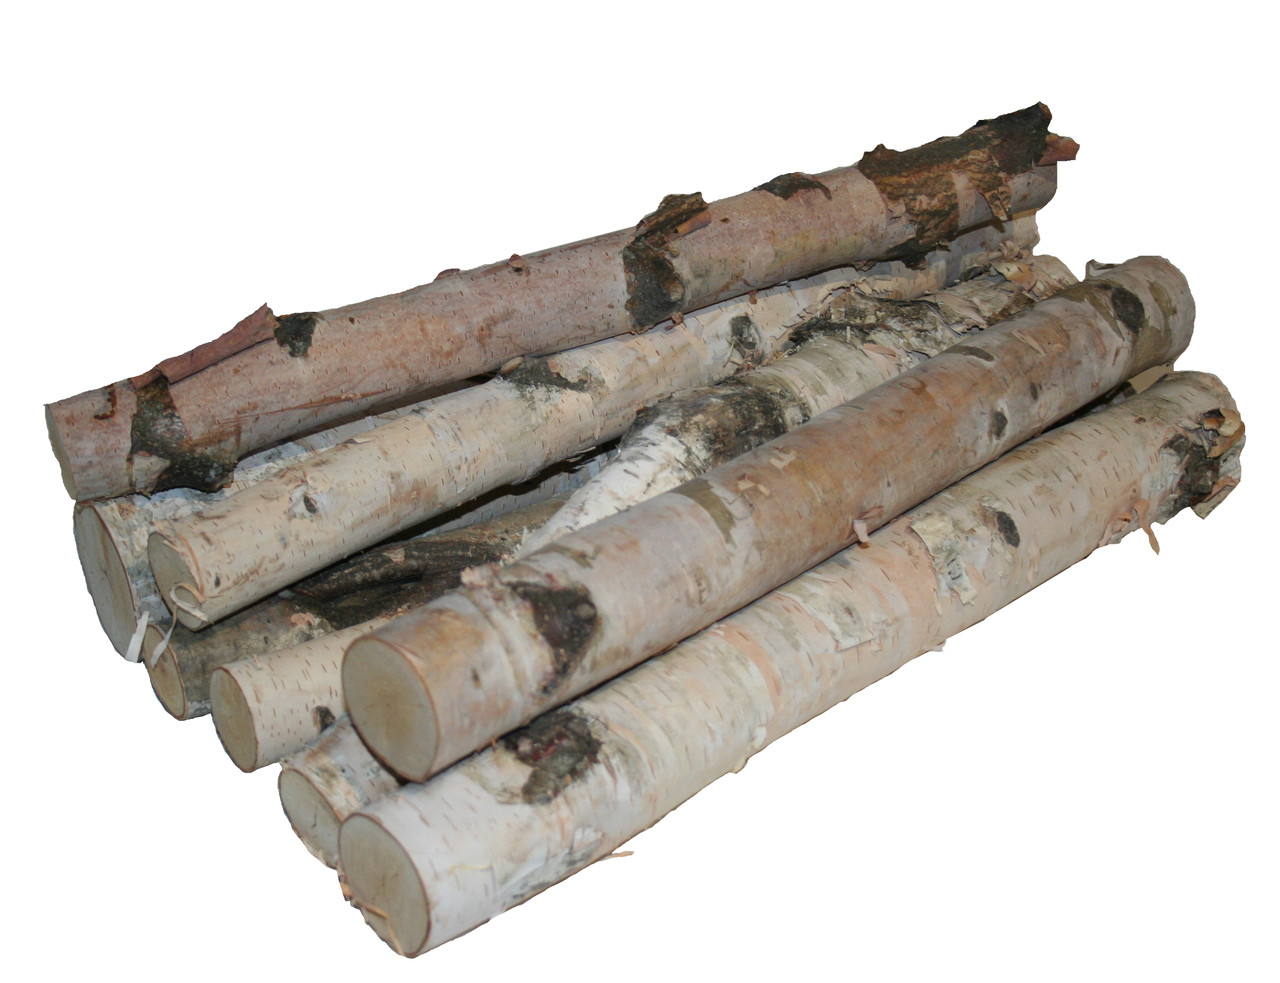 Wilson Decorative White Birch Log Bundle, Natural Bark Wood Home Décor -  17-18 in Length 1.5-3 Dia. (Set of 8)